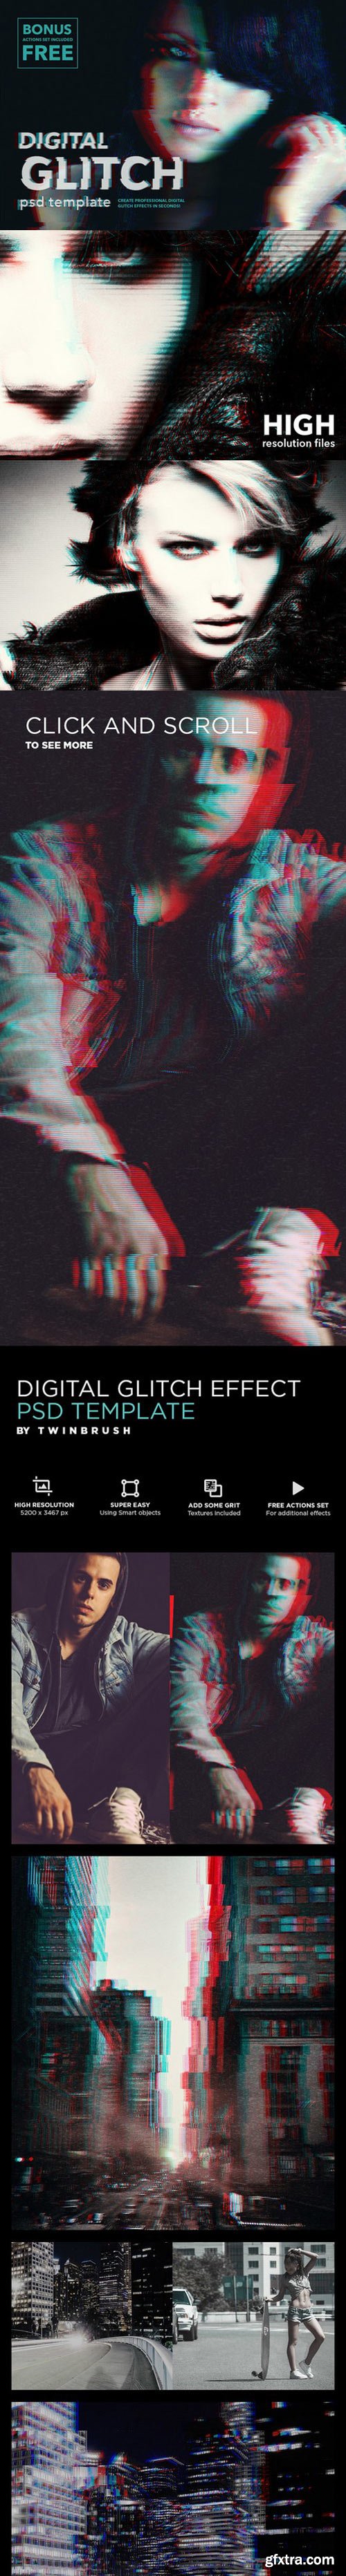 CM - Digital Glitch Effect PSD Templates 889095